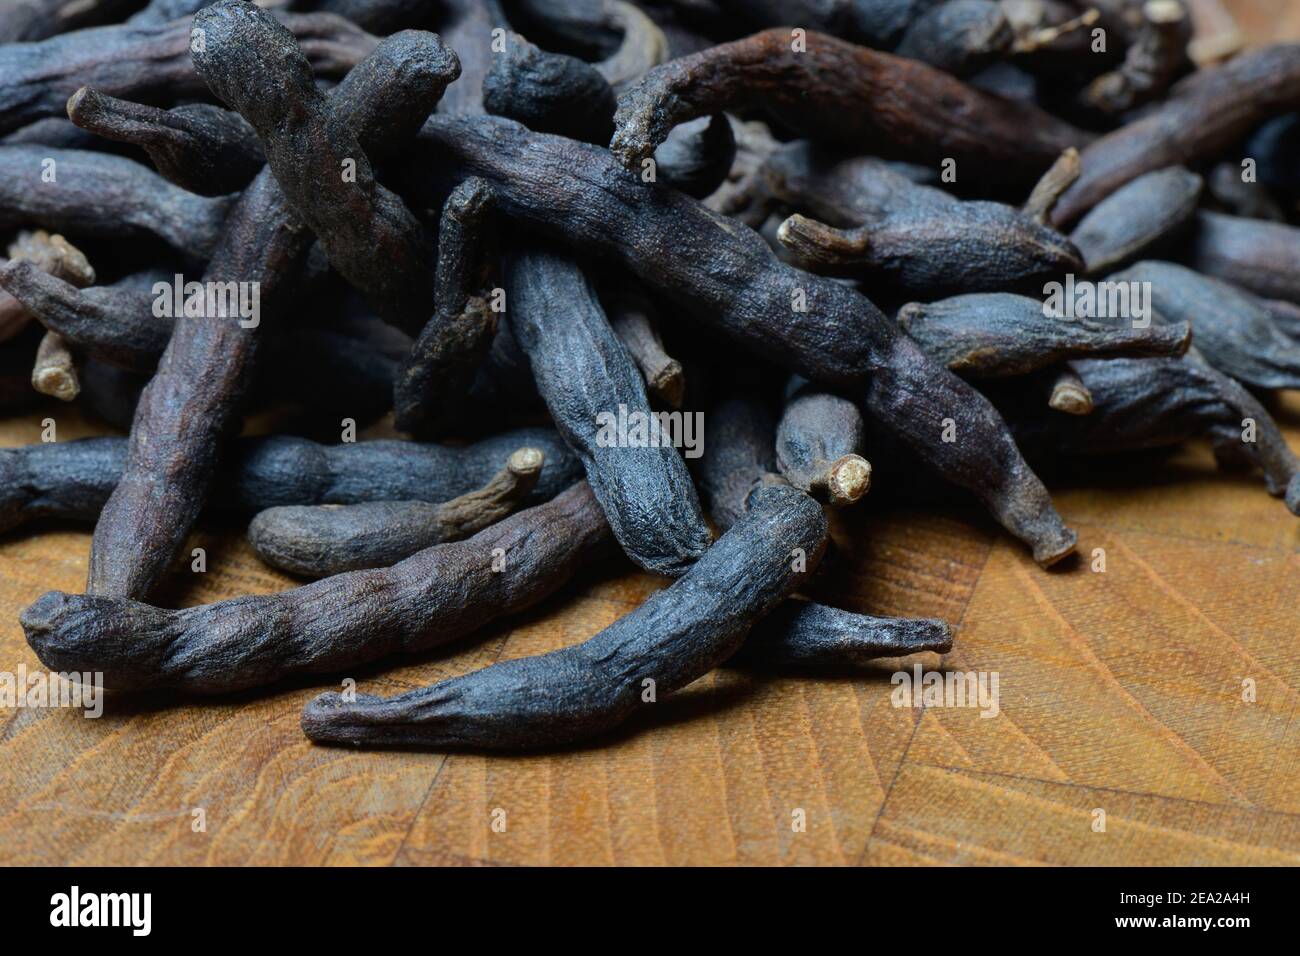 Selim pepper, Xylopia aethiopica Stock Photo